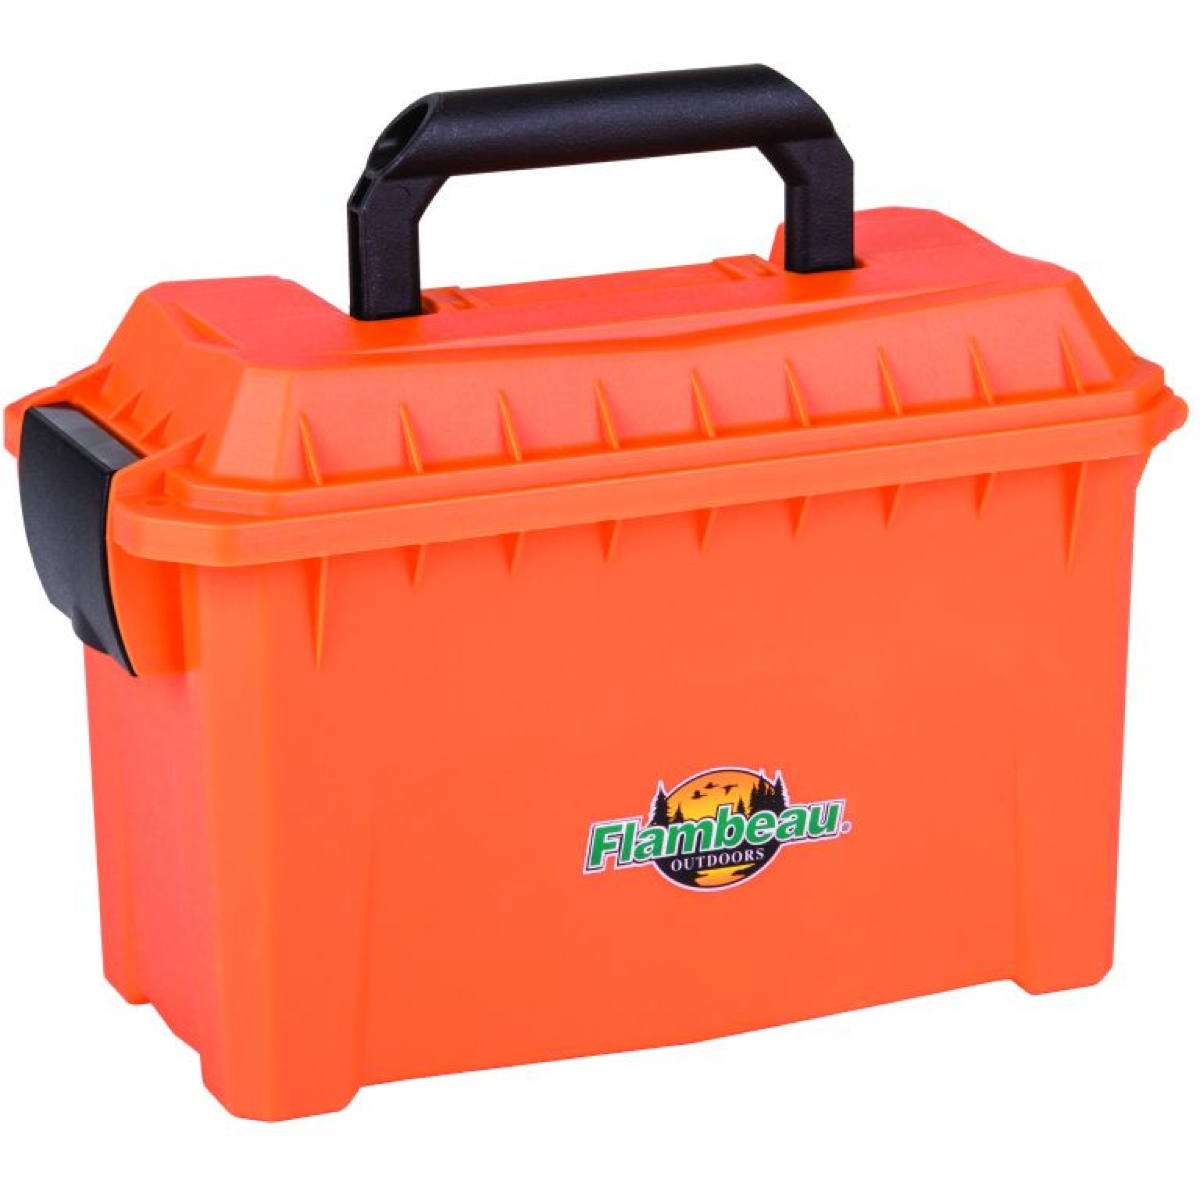 Photo of Flambeau Orange Marine Dry Box for sale at United Tackle Shops.